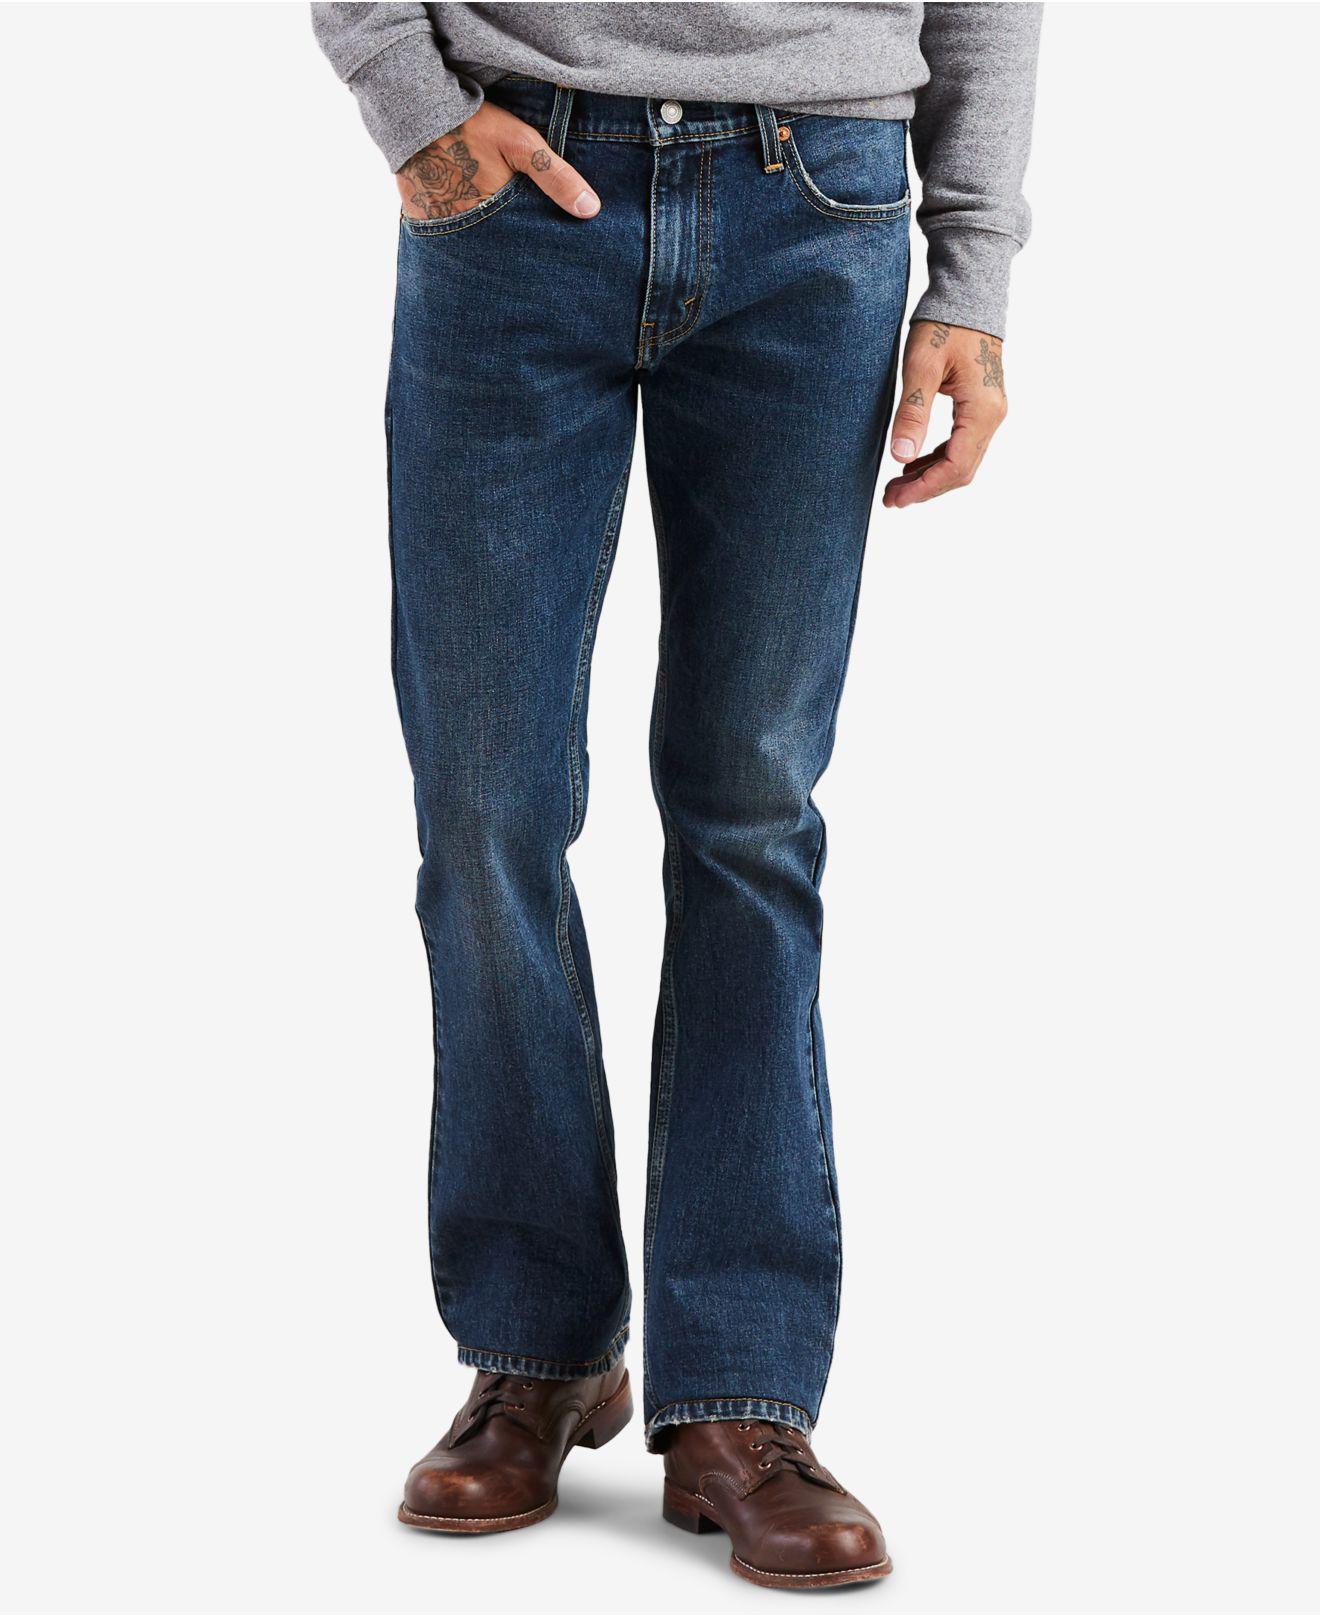 Levi's Denim ® 527 Slim-fit Bootcut Rigid Jeans in Blue for Men - Lyst